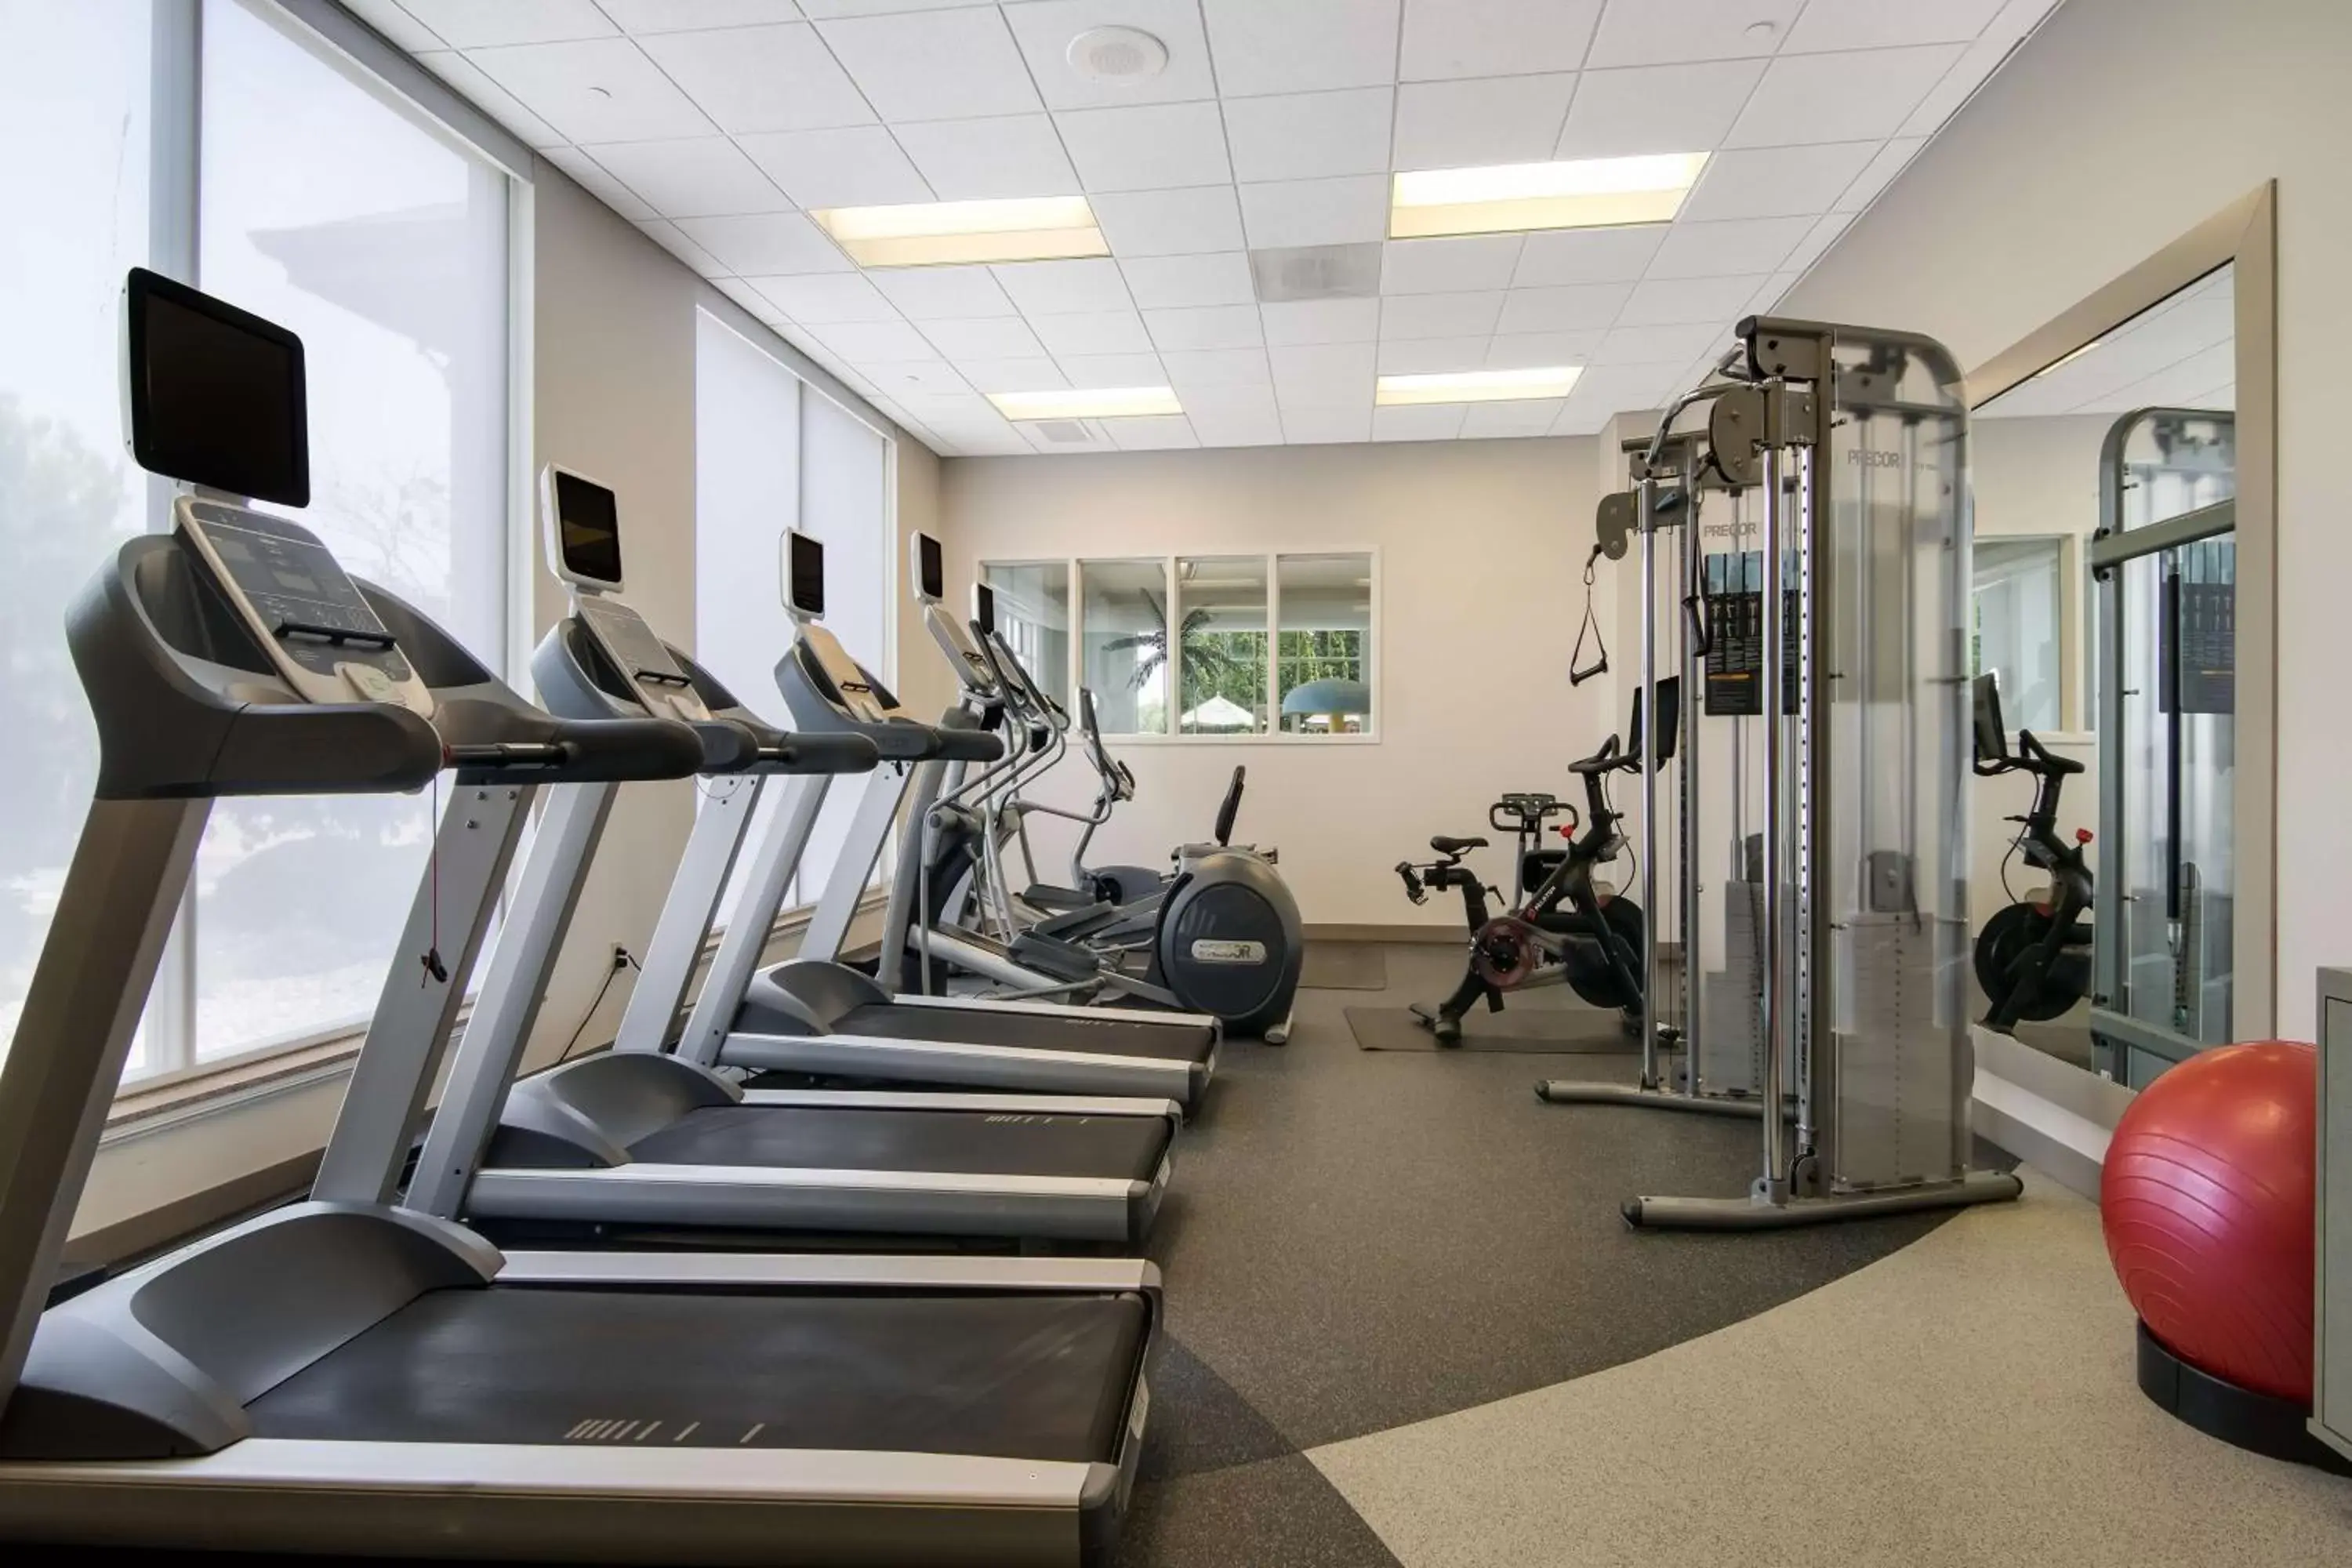 Fitness centre/facilities, Fitness Center/Facilities in Hilton Garden Inn Madison West/Middleton